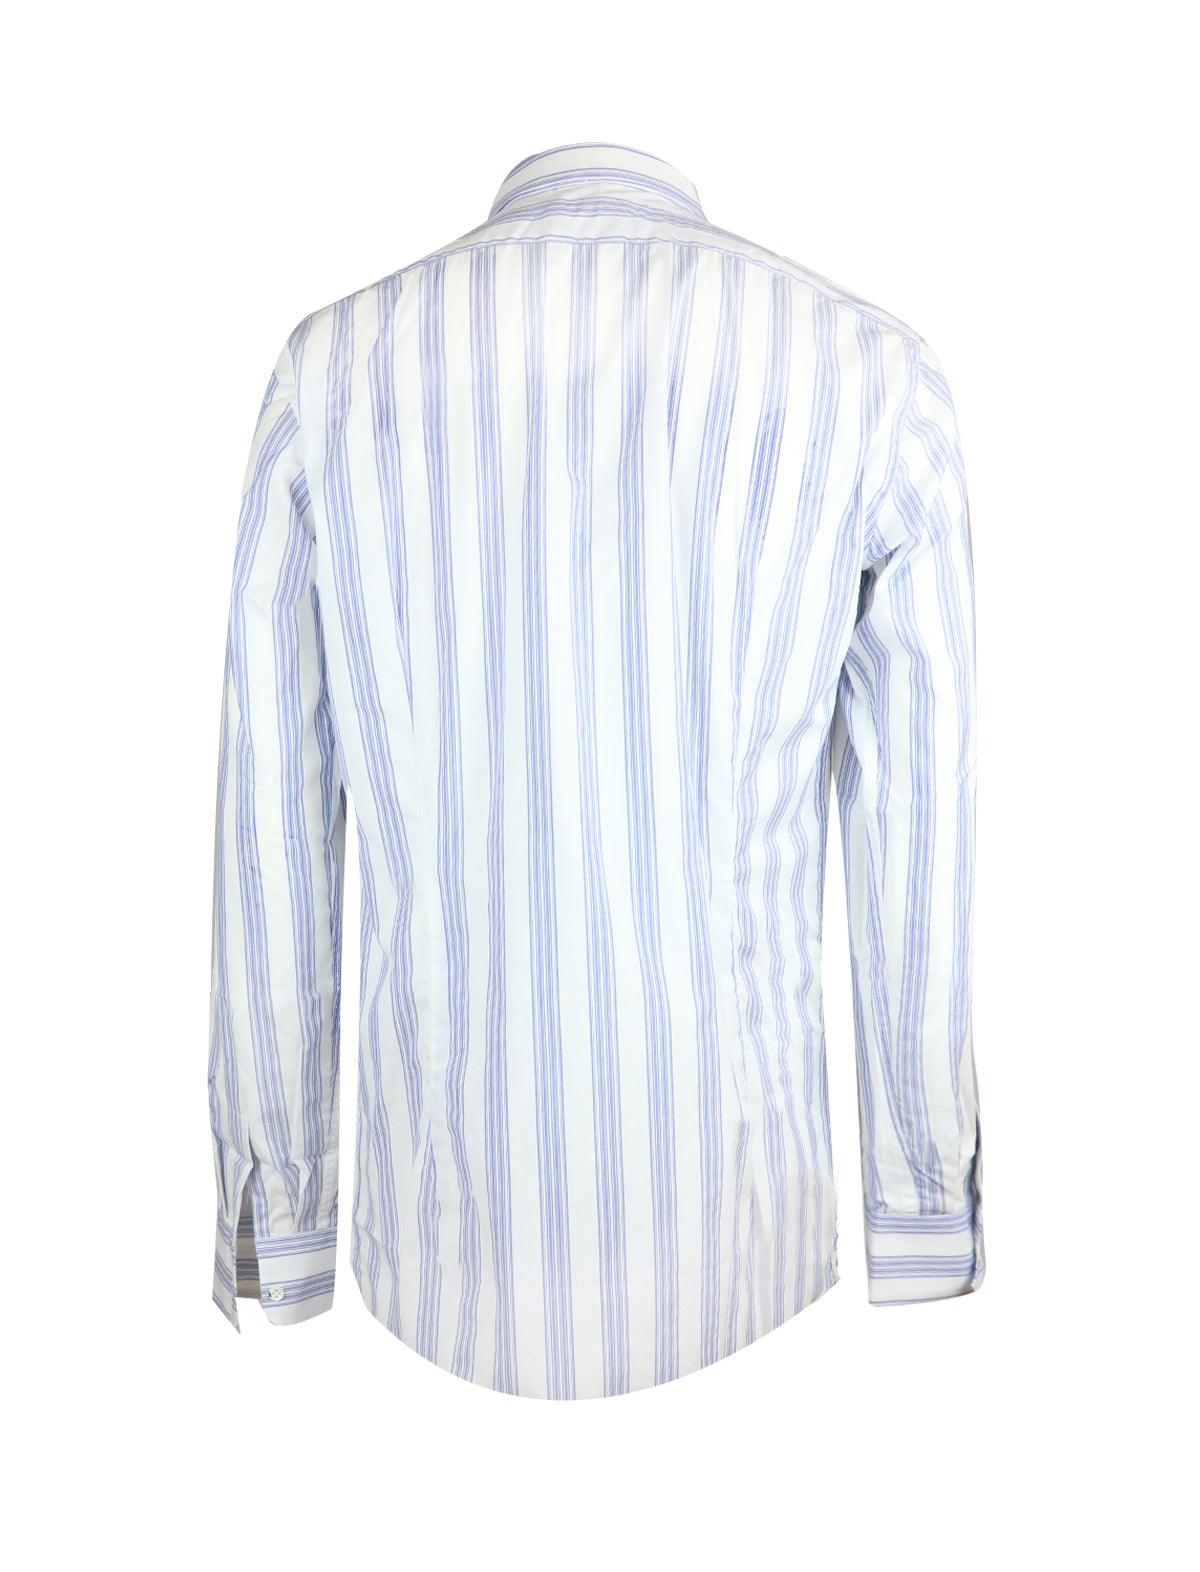 Gabriele Pasini Cotton-Blend Shirt in White/Blue Stripes